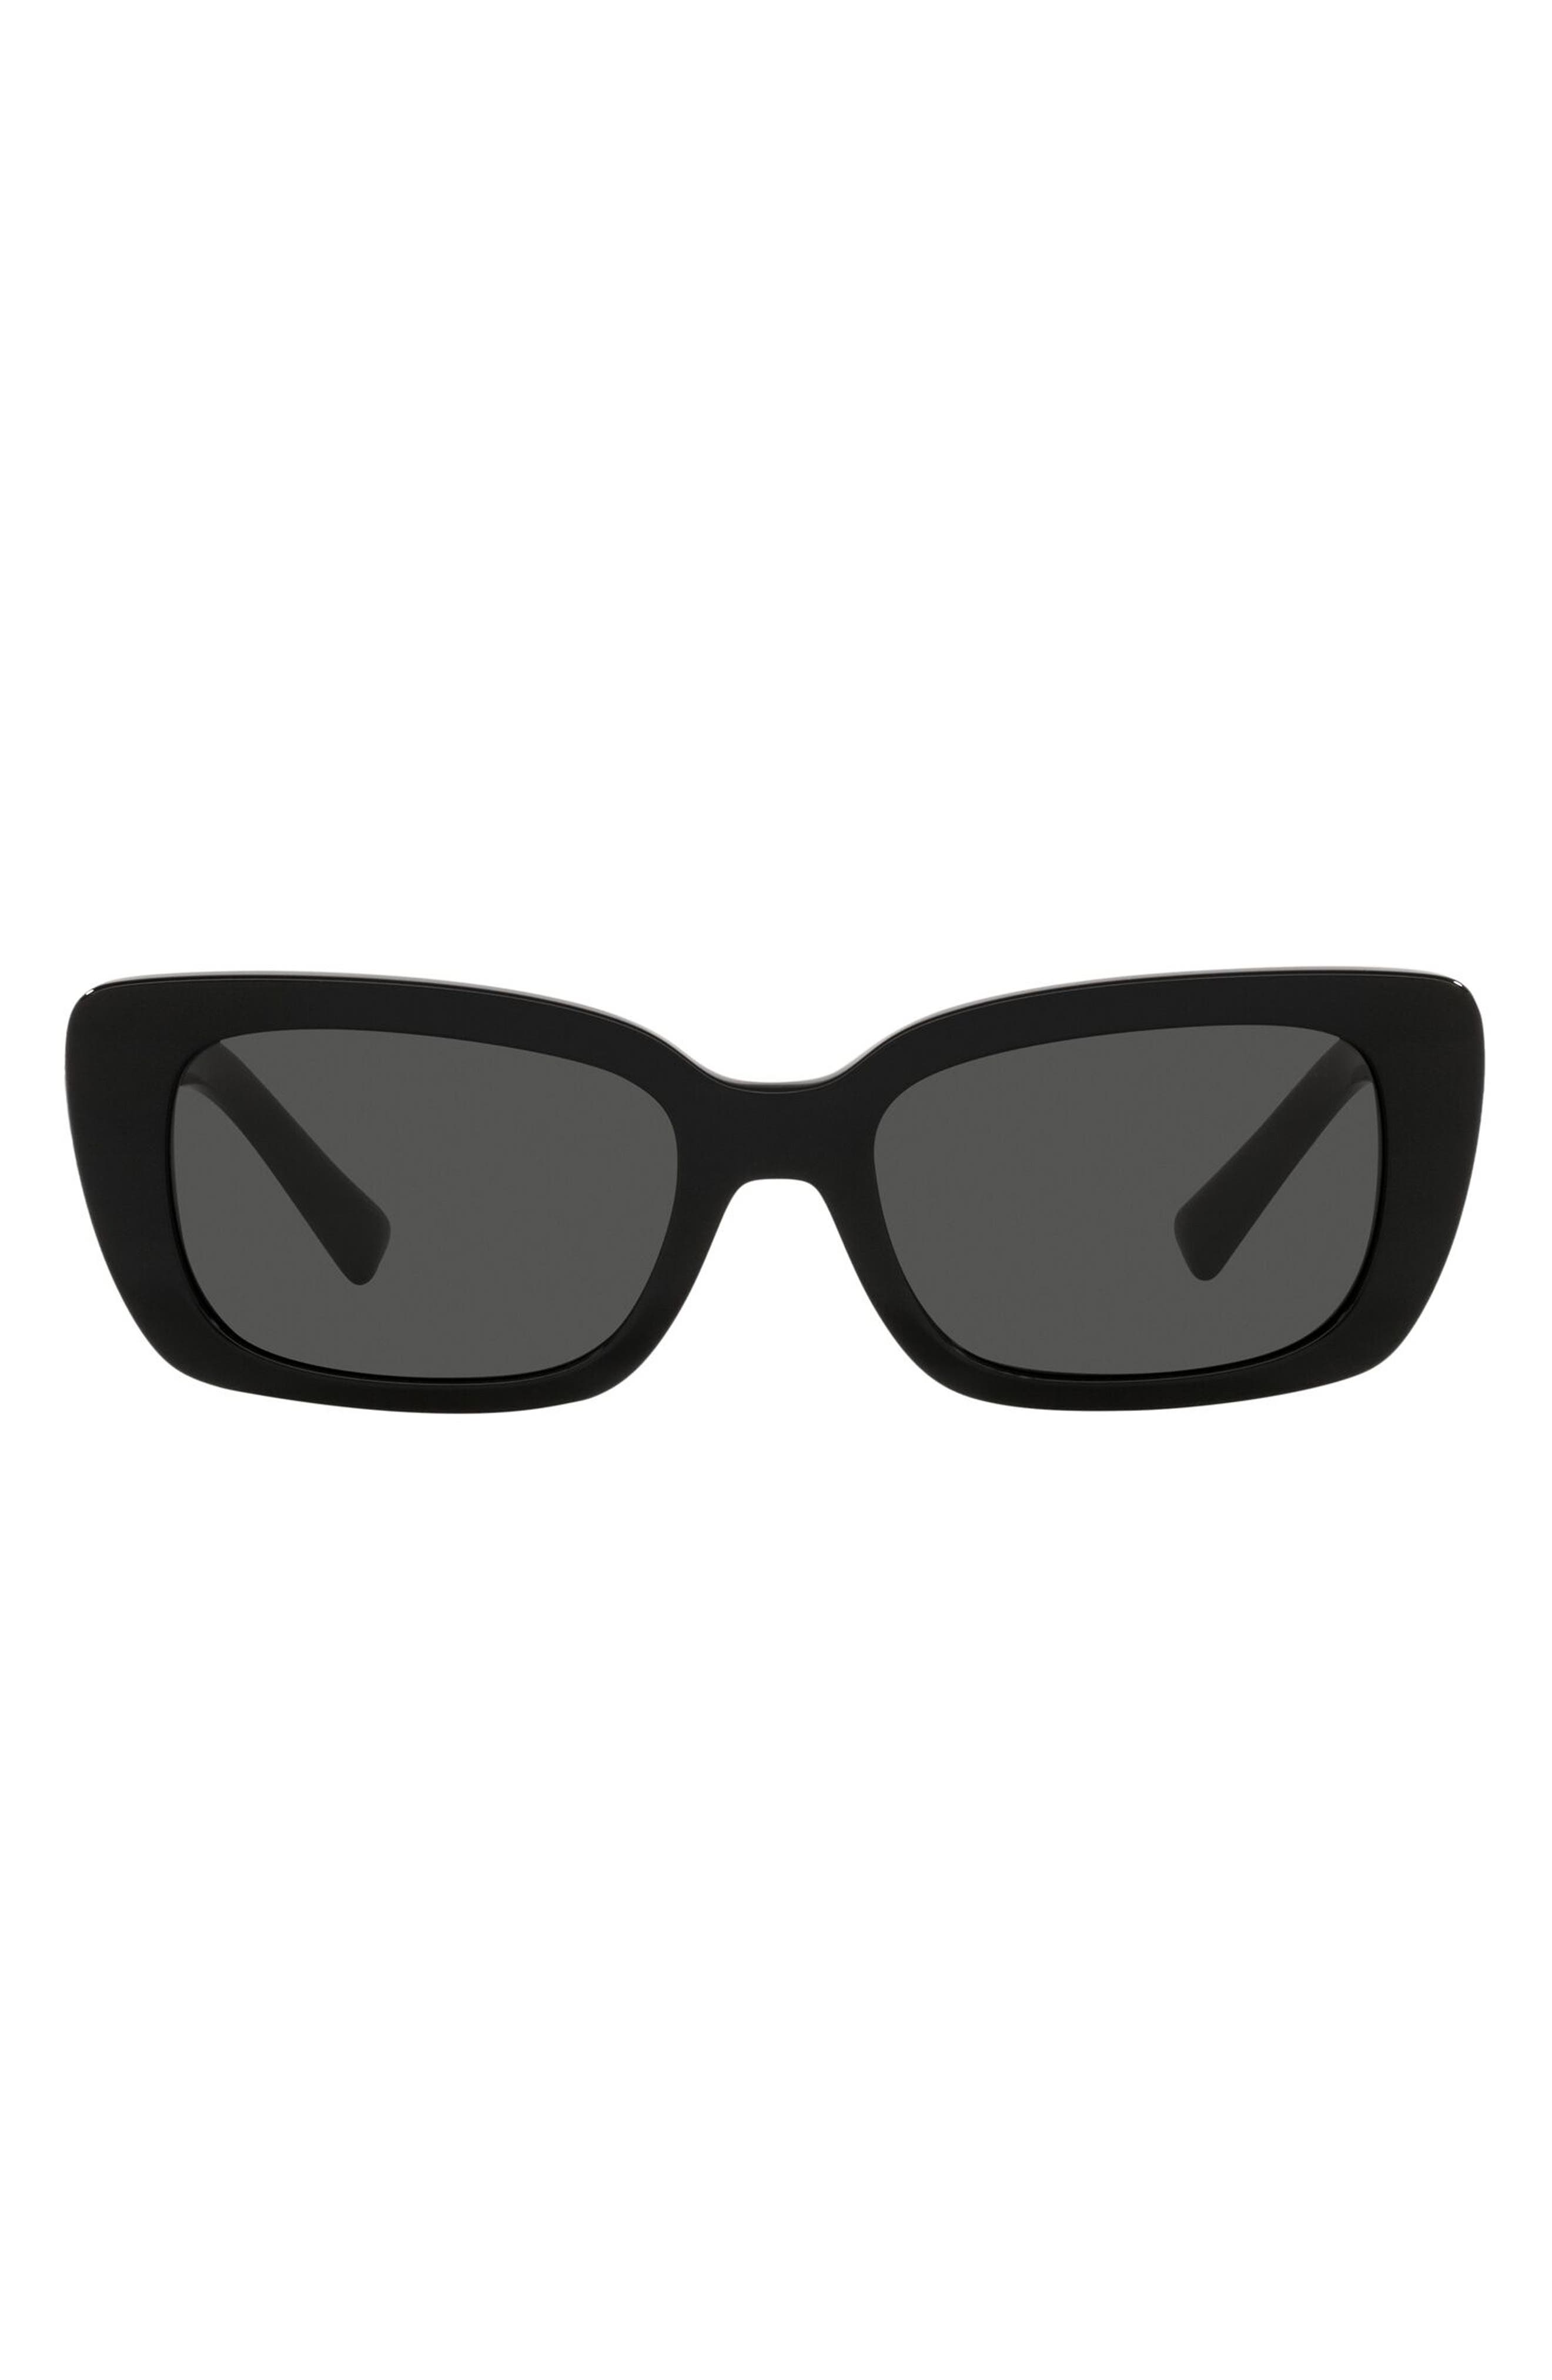 Valentino 52mm Rectangular Sunglasses in Black/Smoke at Nordstrom